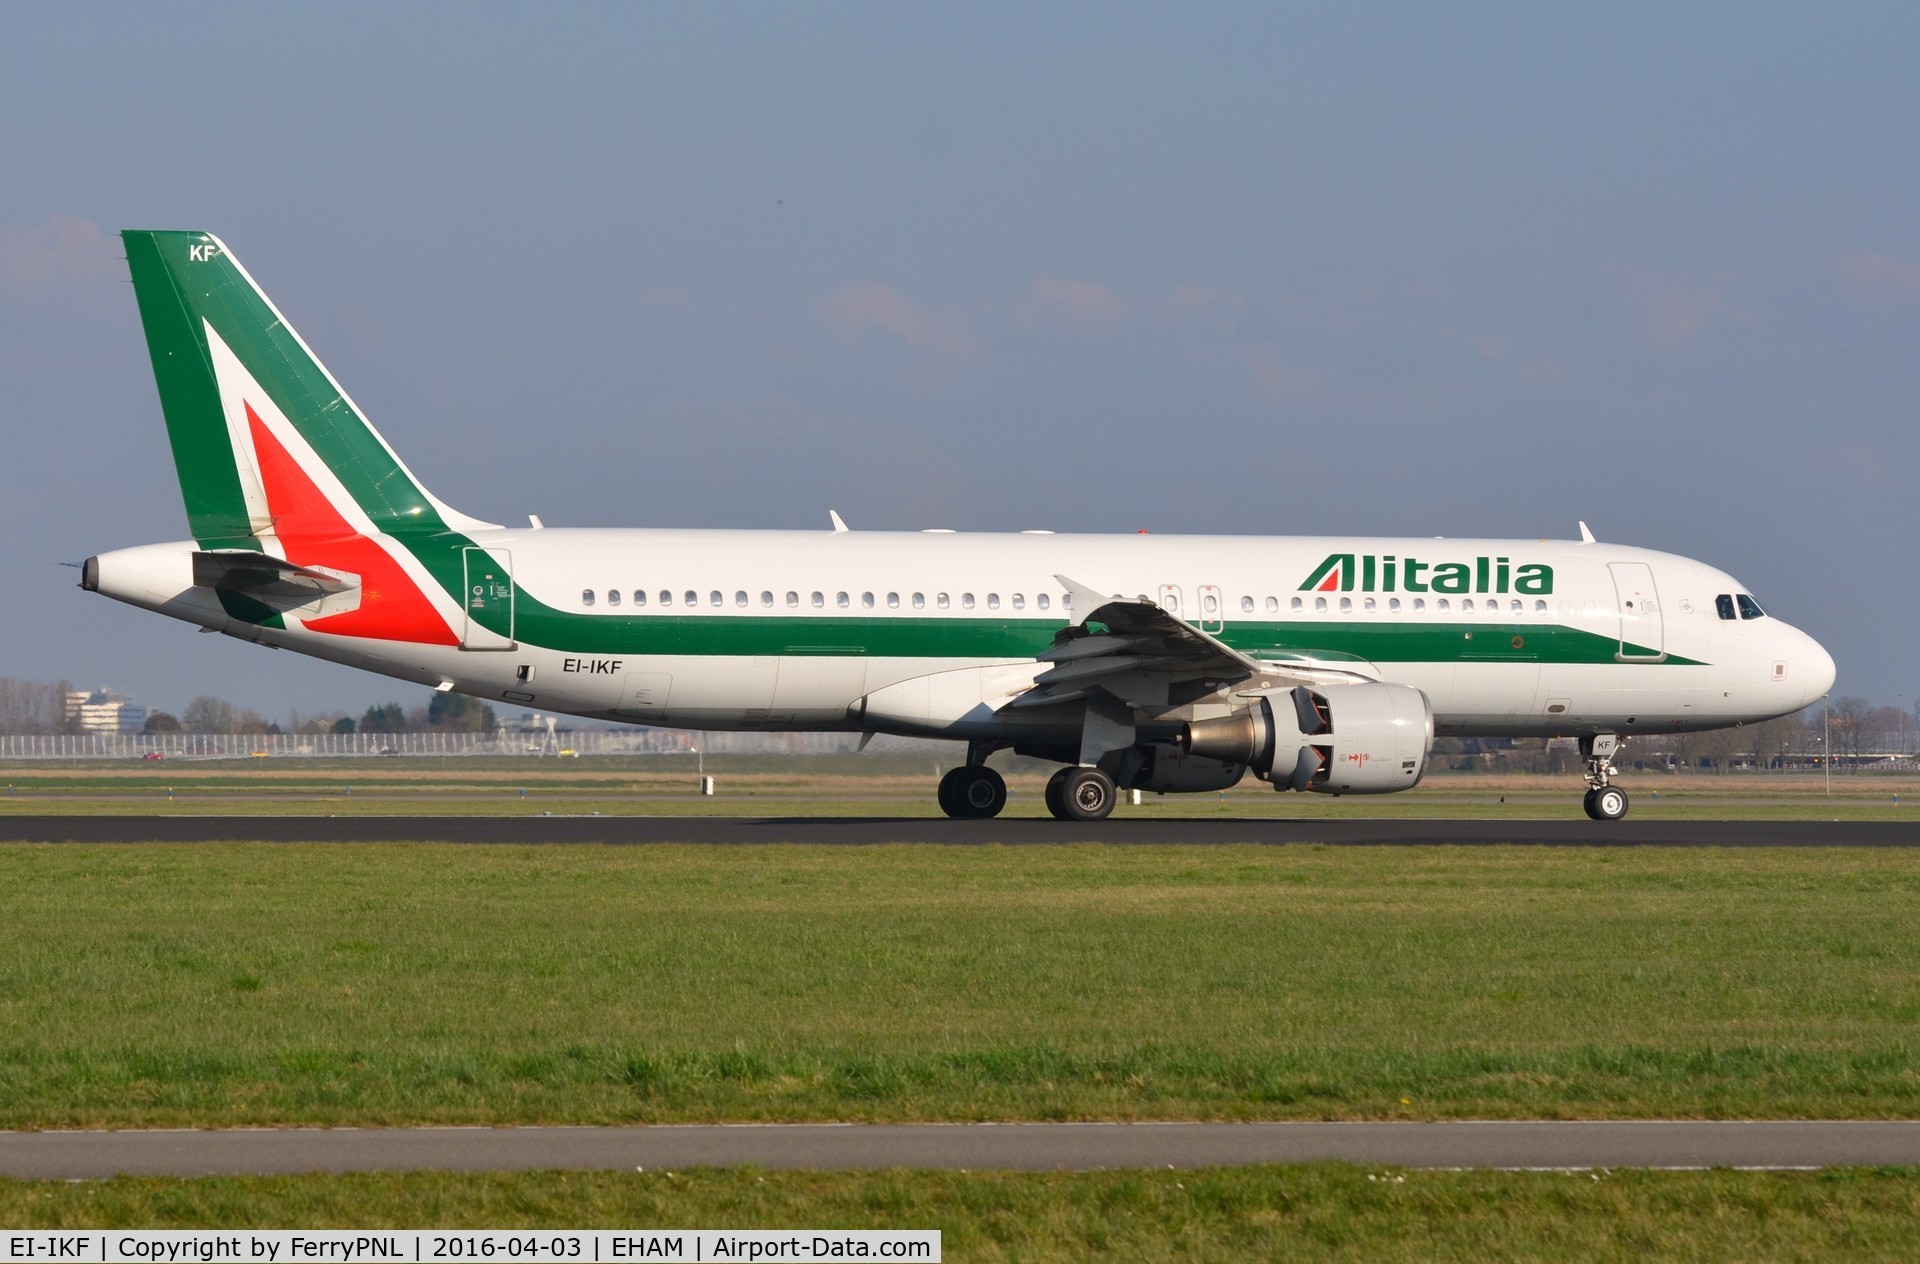 EI-IKF, 2001 Airbus A320-214 C/N 1473, Alitalia A320 decelerating.